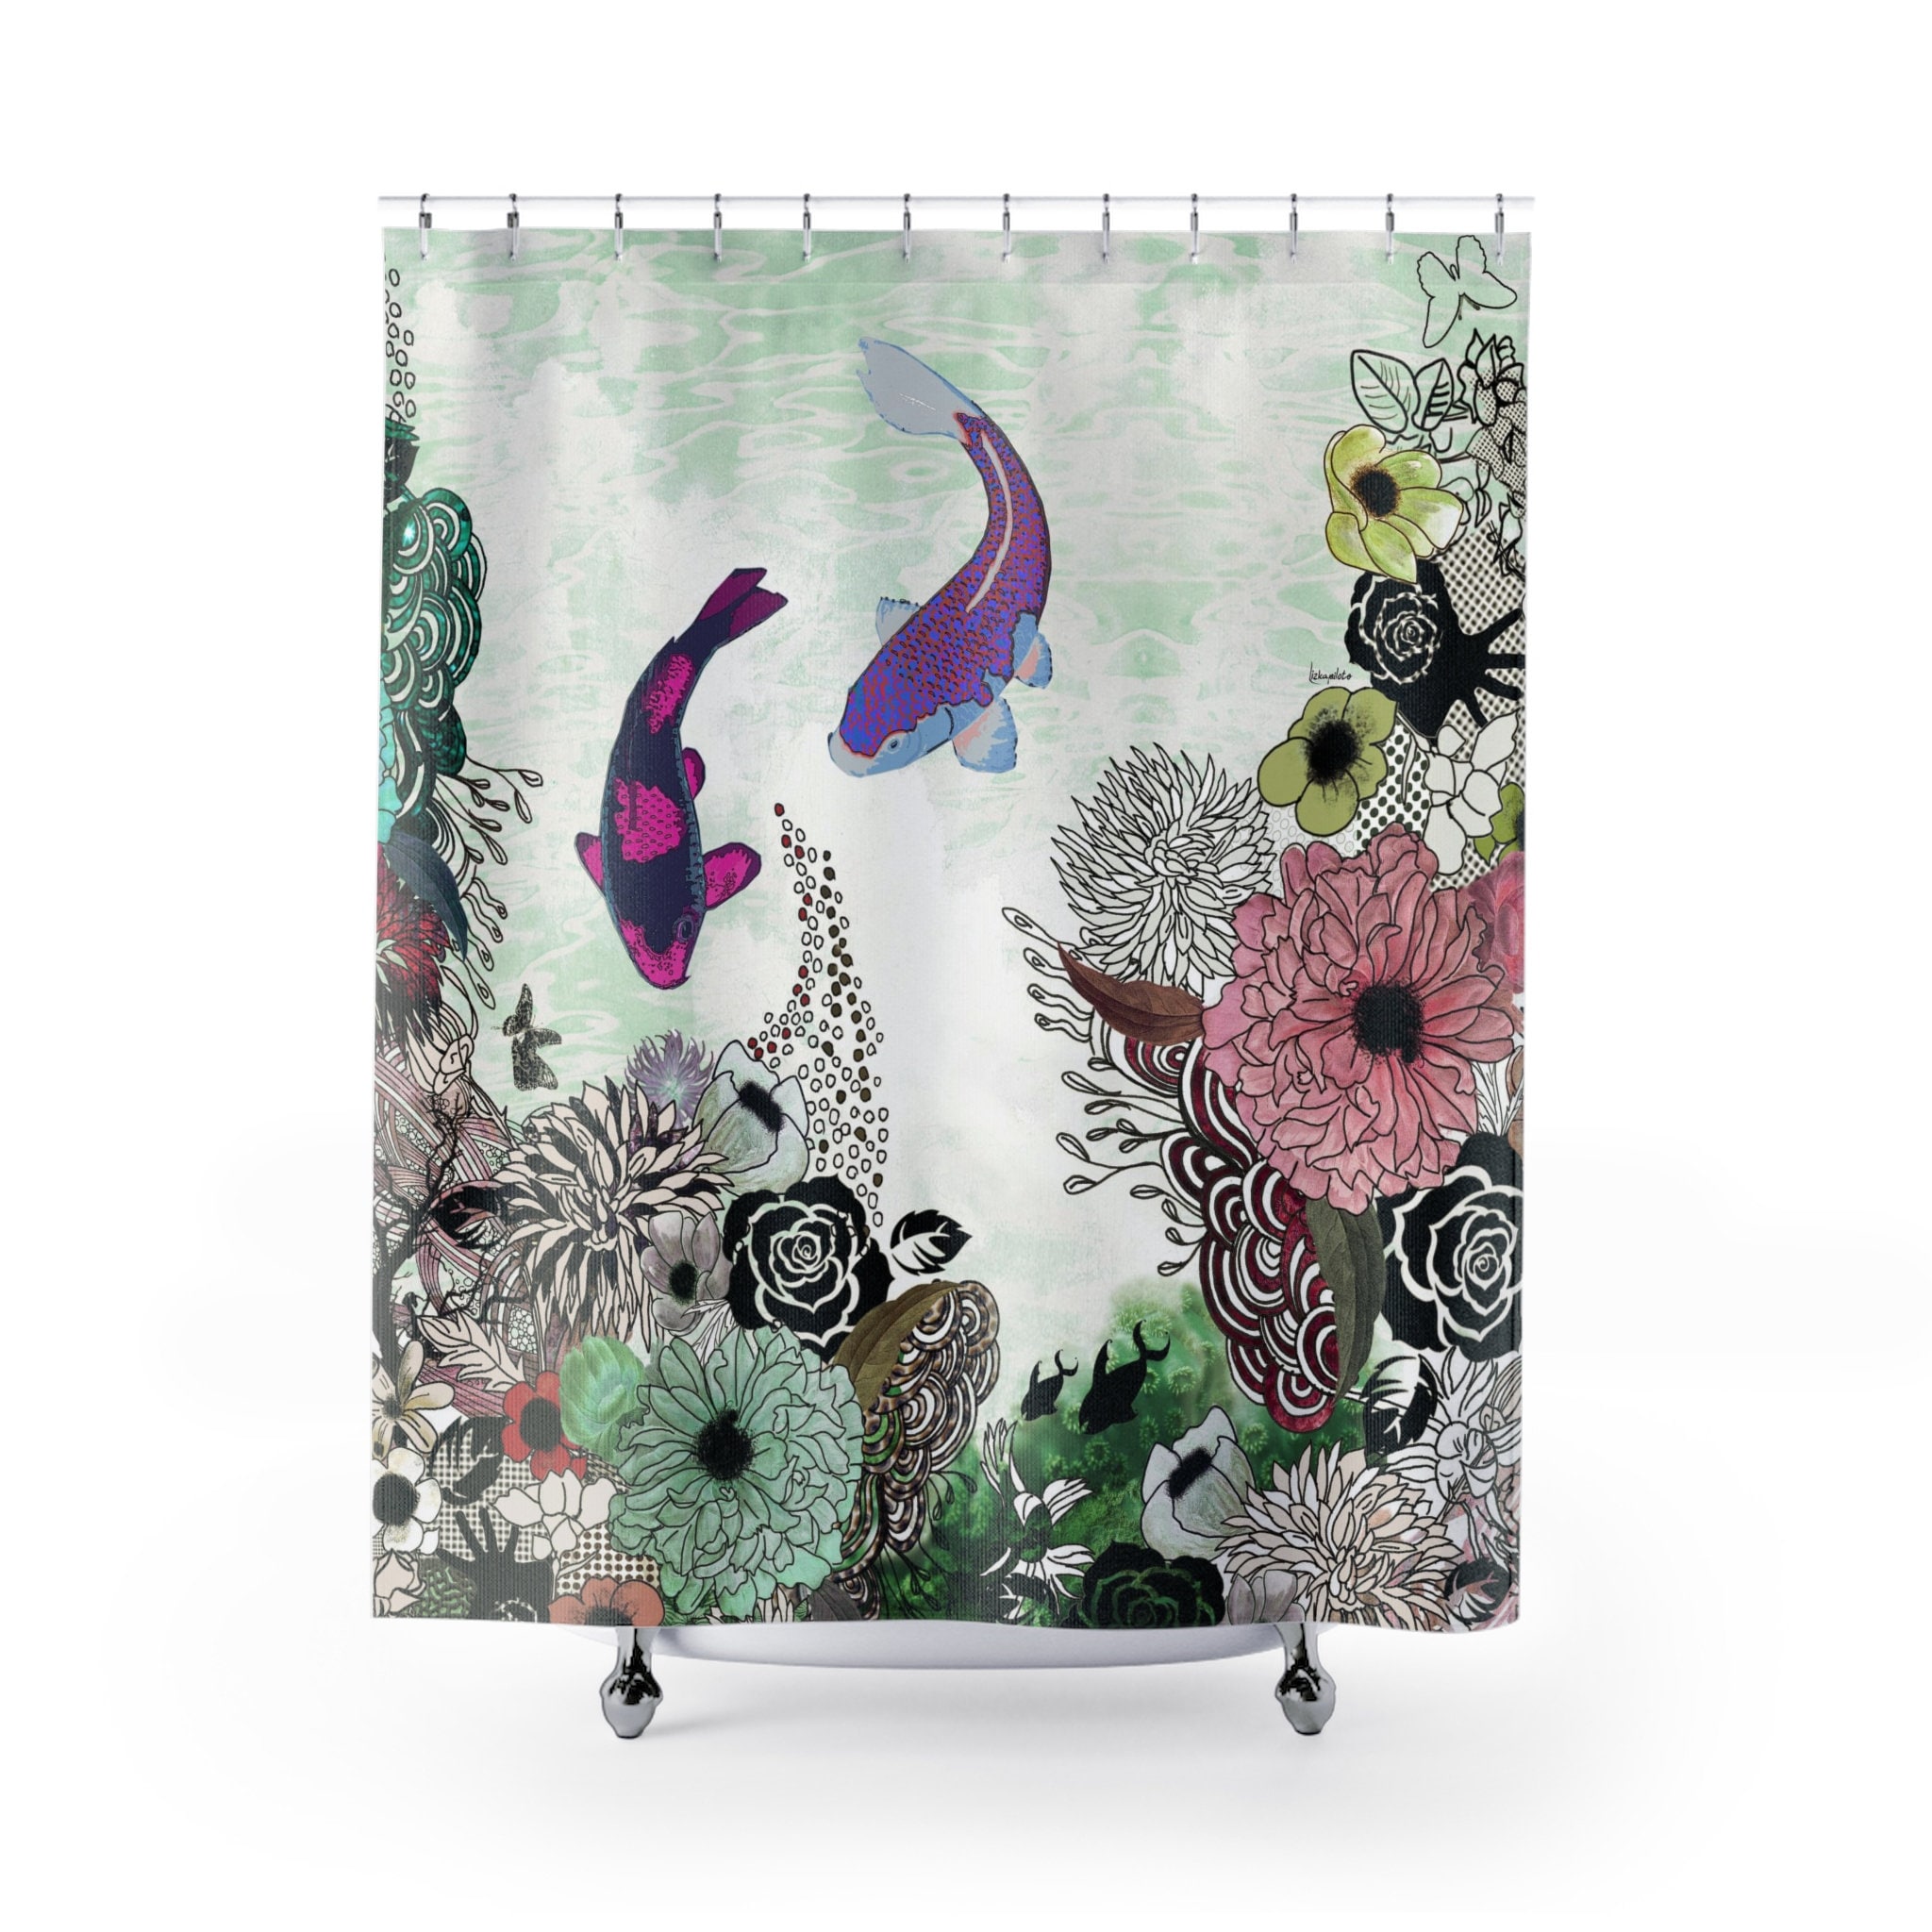 Koi Fish Shower Curtain, Colorful Shower Curtain, Bathroom Decor